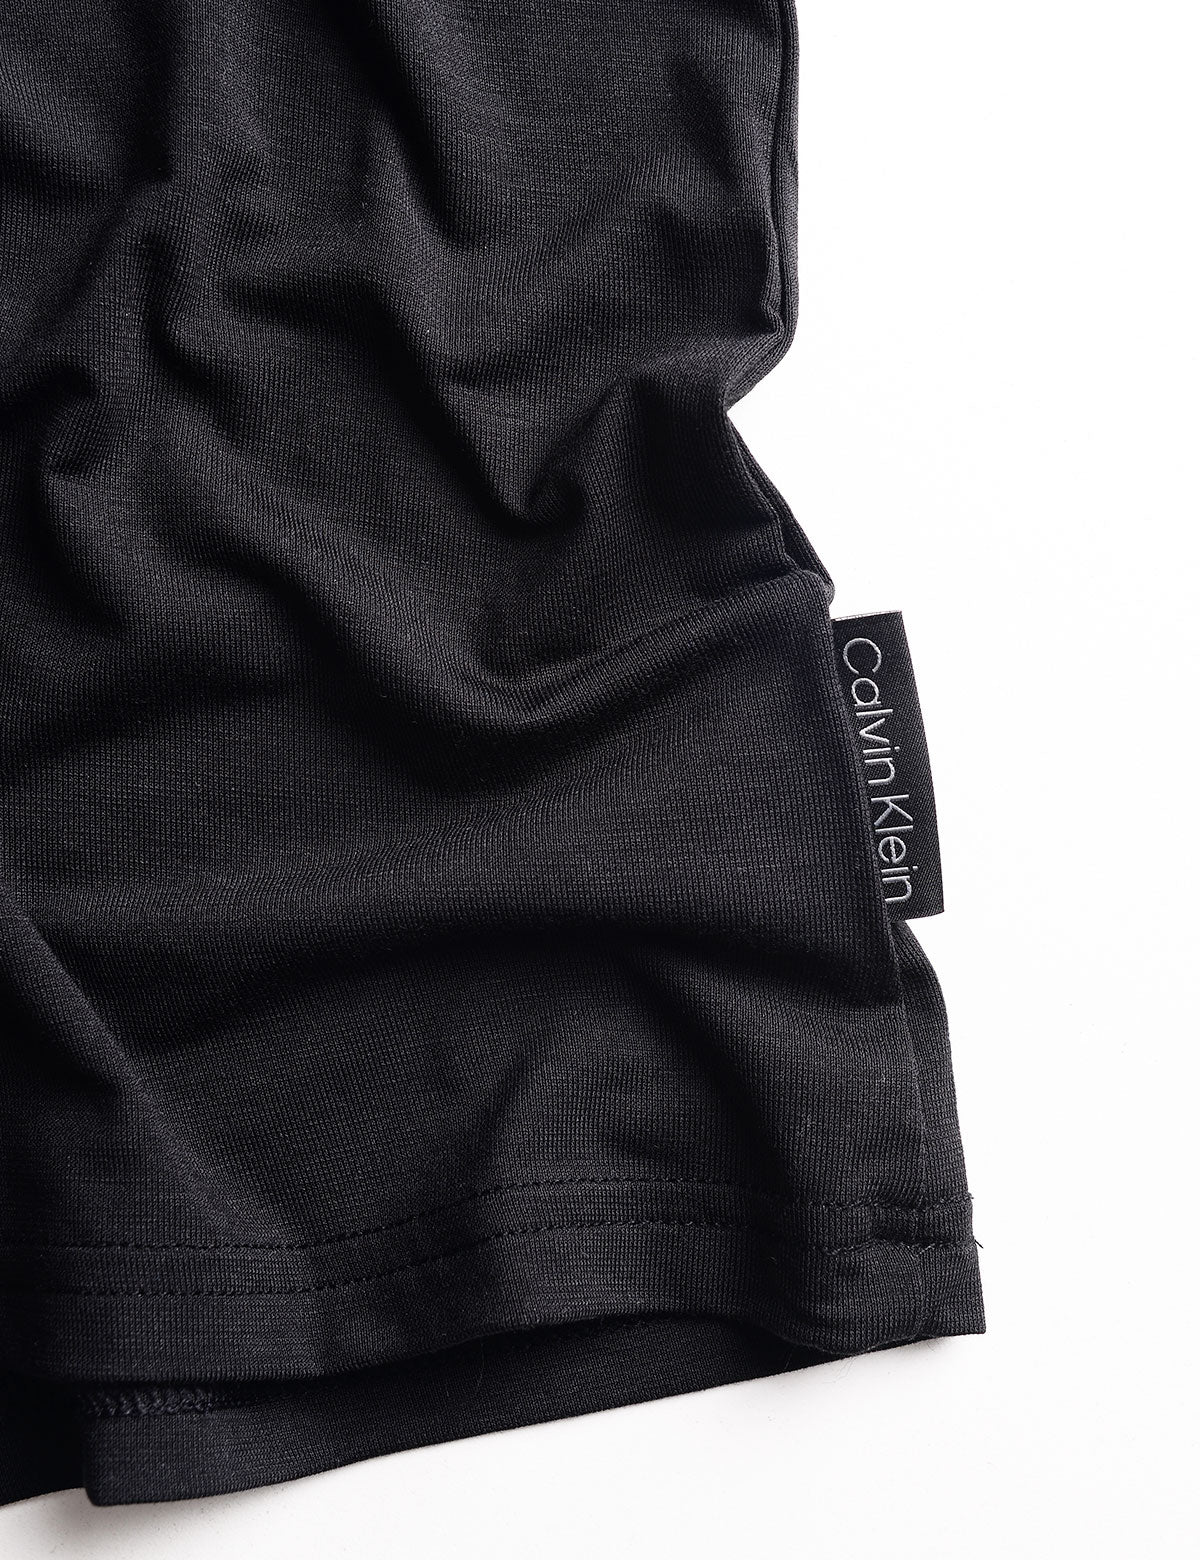 Detail shot of Ultra-Soft Modern Short Sleeve Crew Tee - Black tag